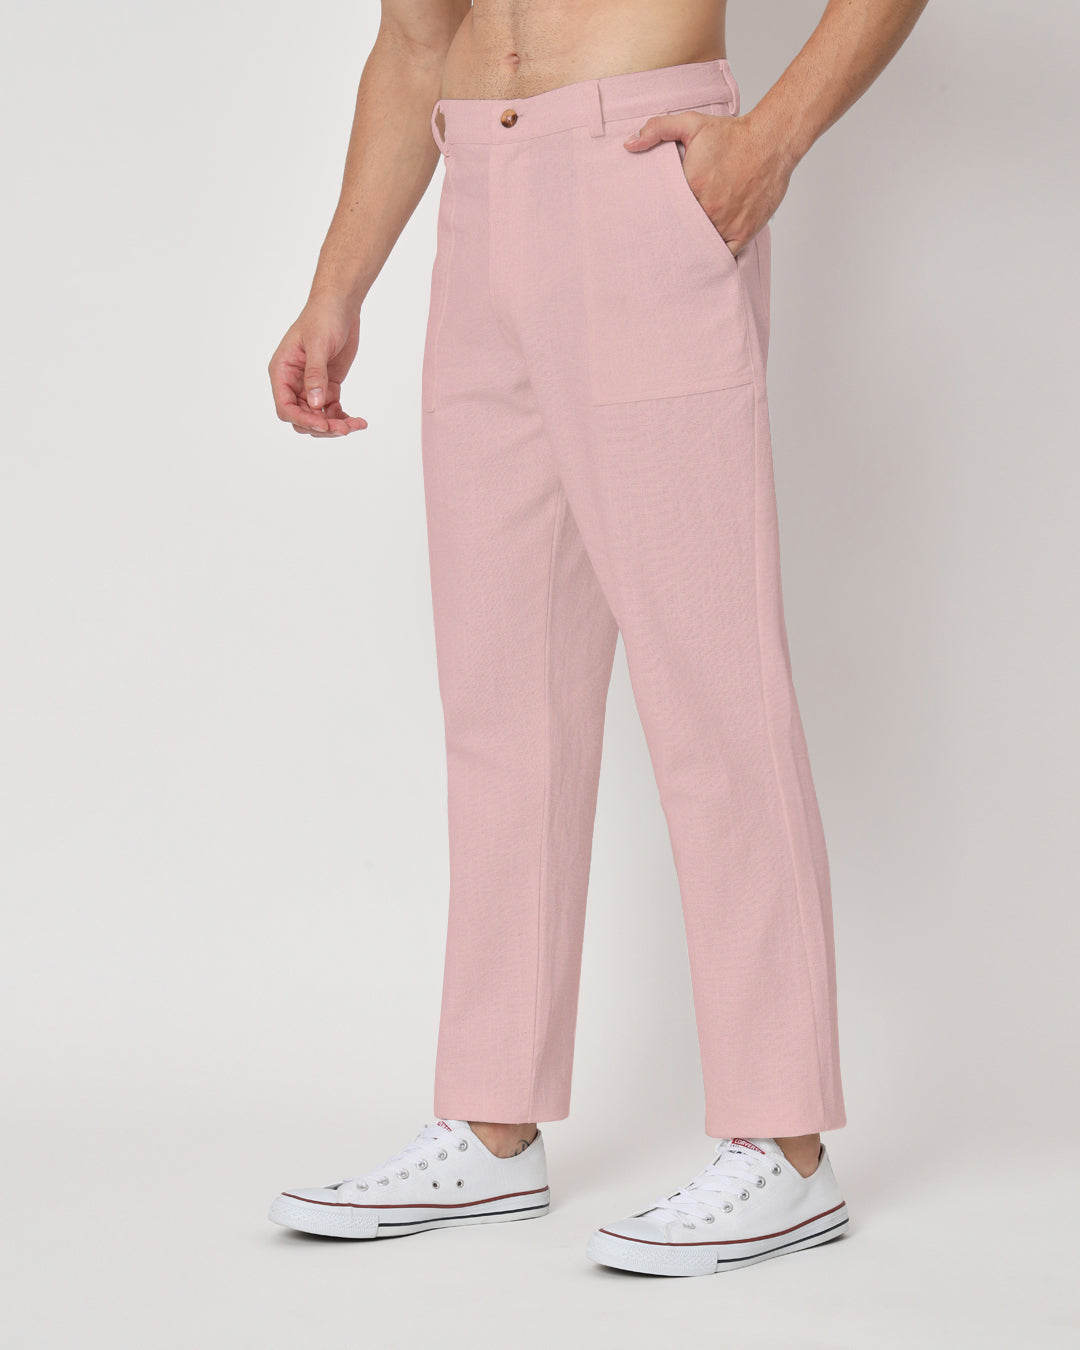 Combo : Comfy Ease Grey & Fondant Pink Men's Pants - Set of 2